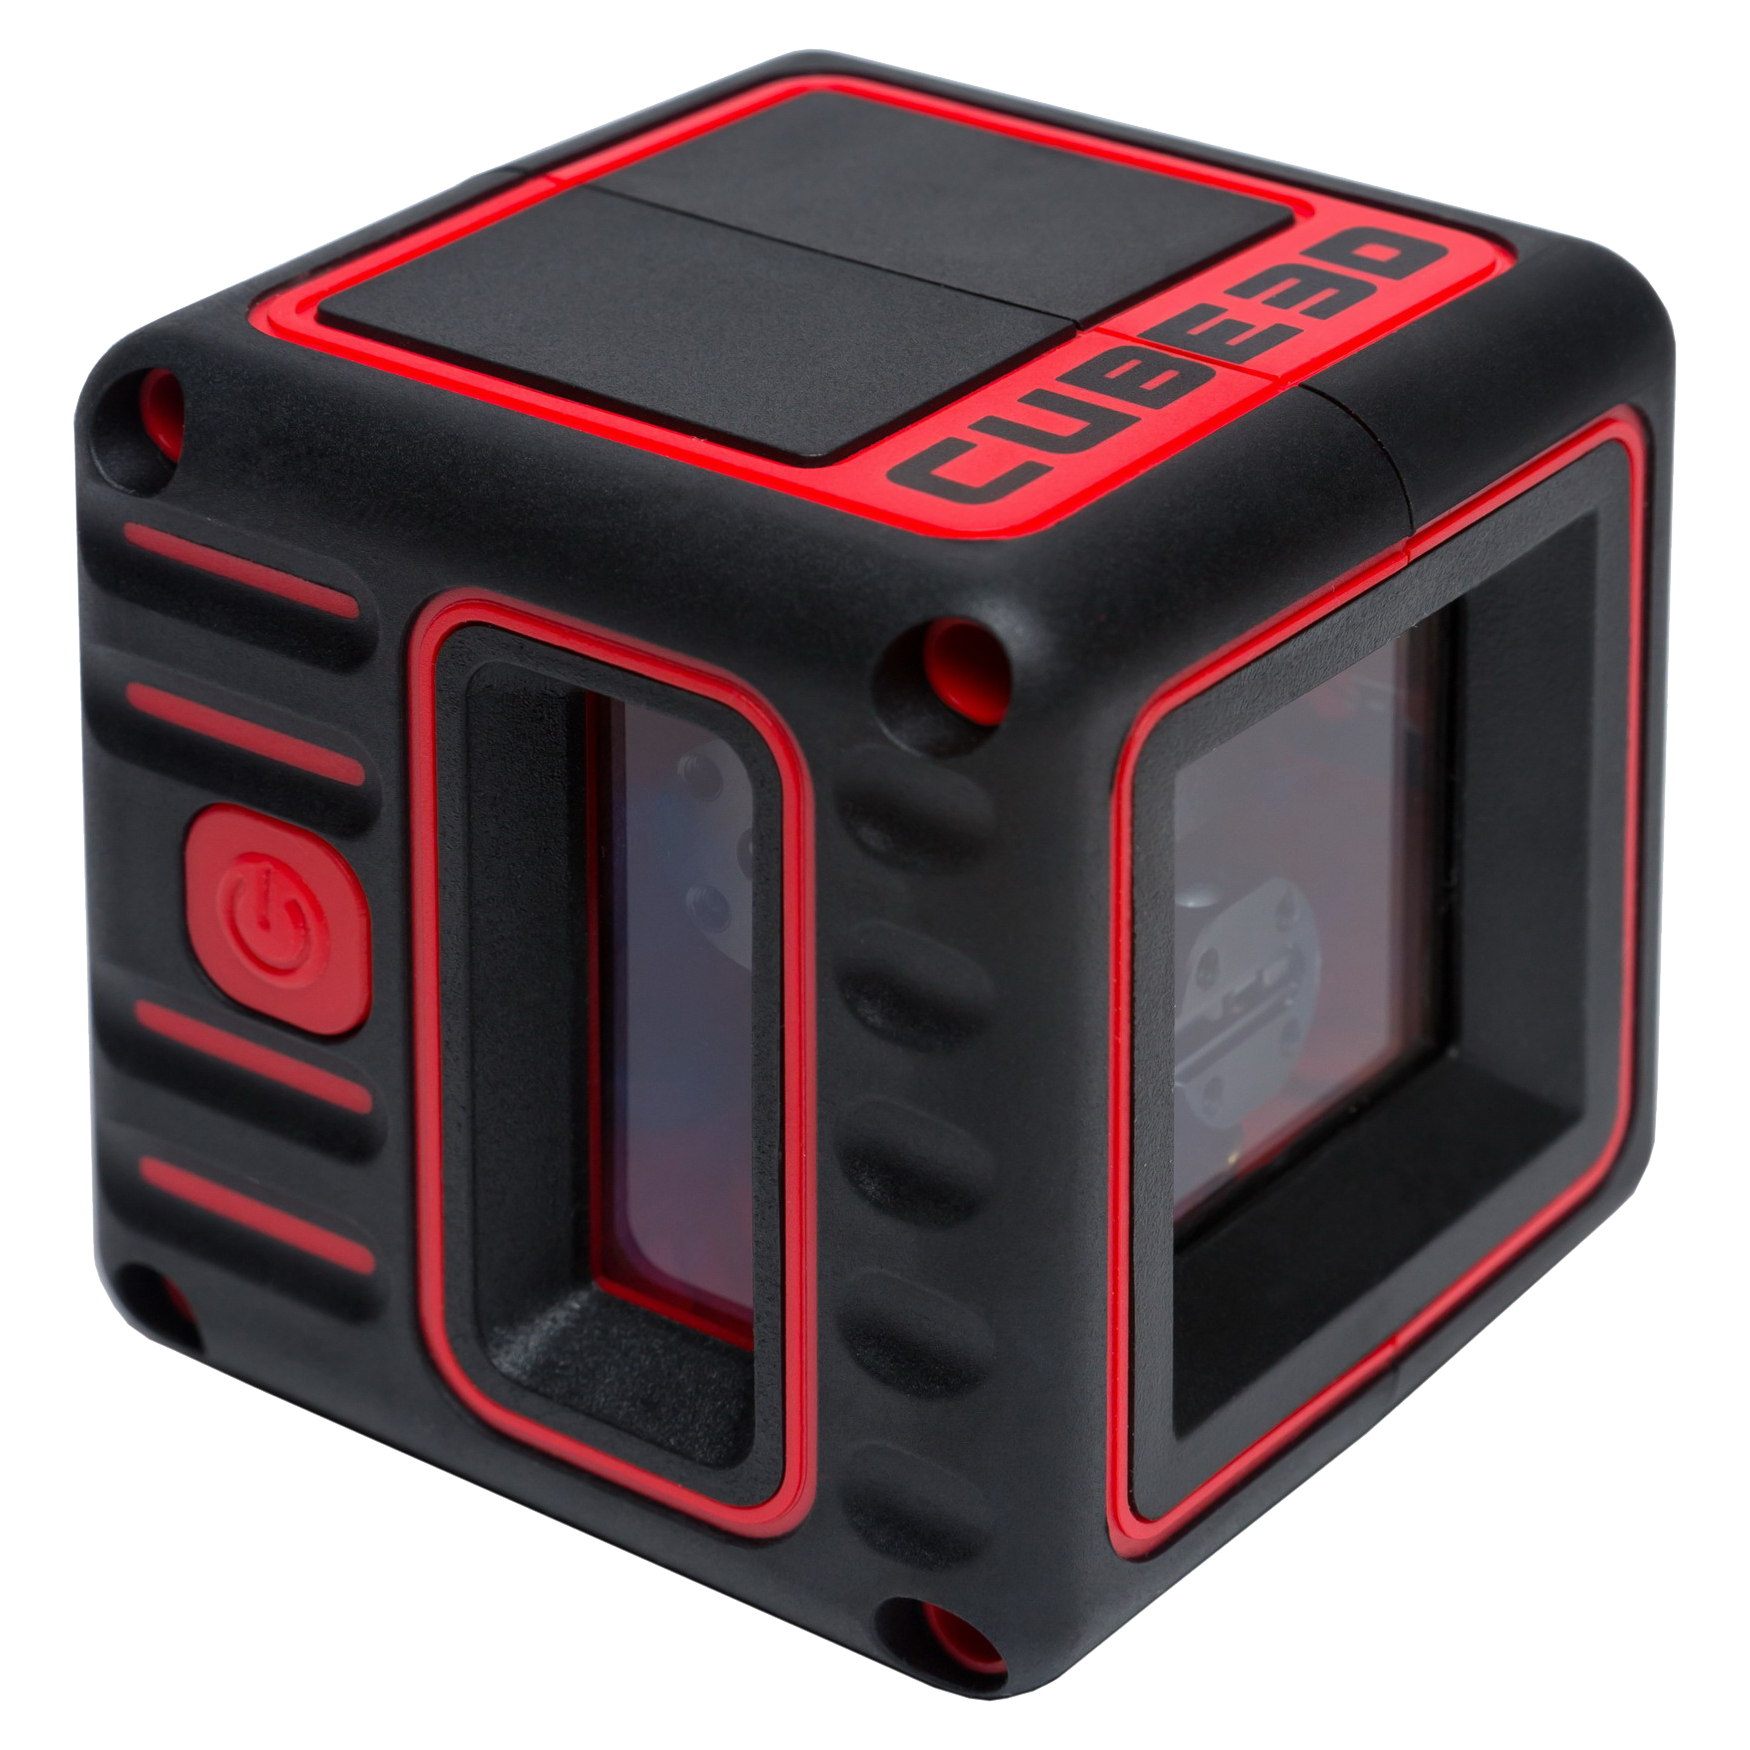 Cube 360 basic edition. Лазерный нивелир ada Cube. Лазерный нивелир ada Cube professional Edition. Нивелир лазерный ada Cube 3d Basic Edition а00382. Ada Cube 3d professional Edition а00384.